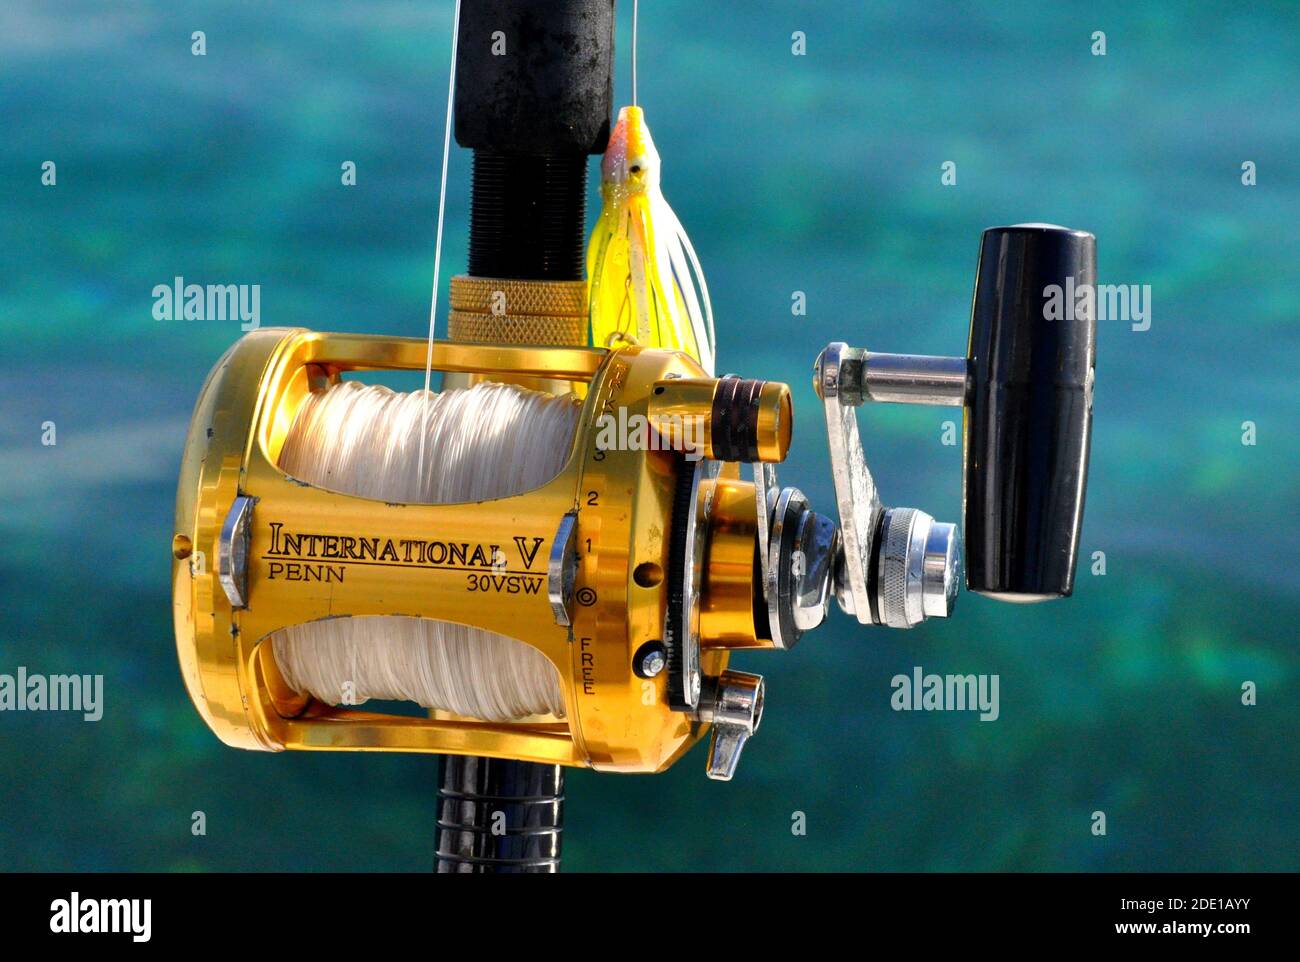 Negril, Jamaica - 4 de mayo de 2015 - International V Penn carrete de pesca de color oro para la pesca en alta mar Foto de stock